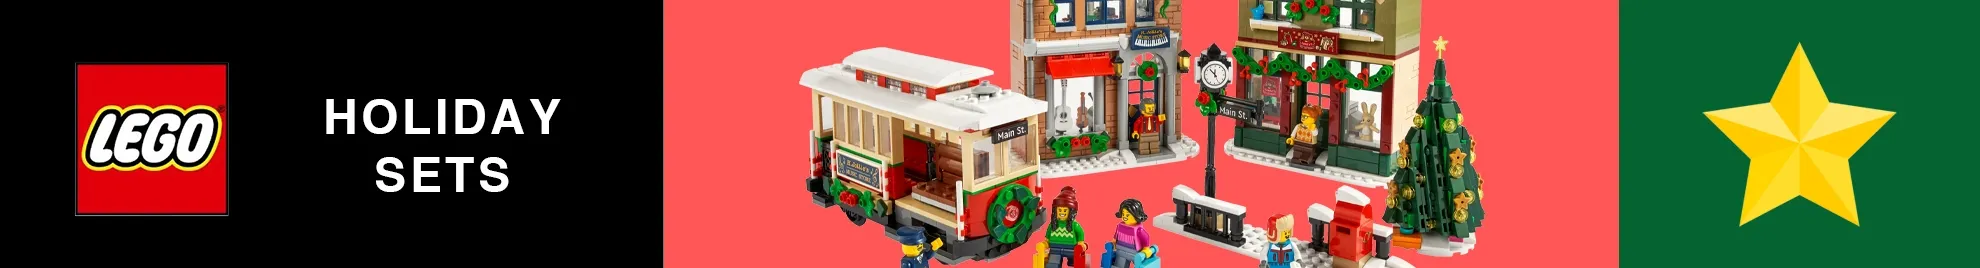 LEGO Holiday sets banner